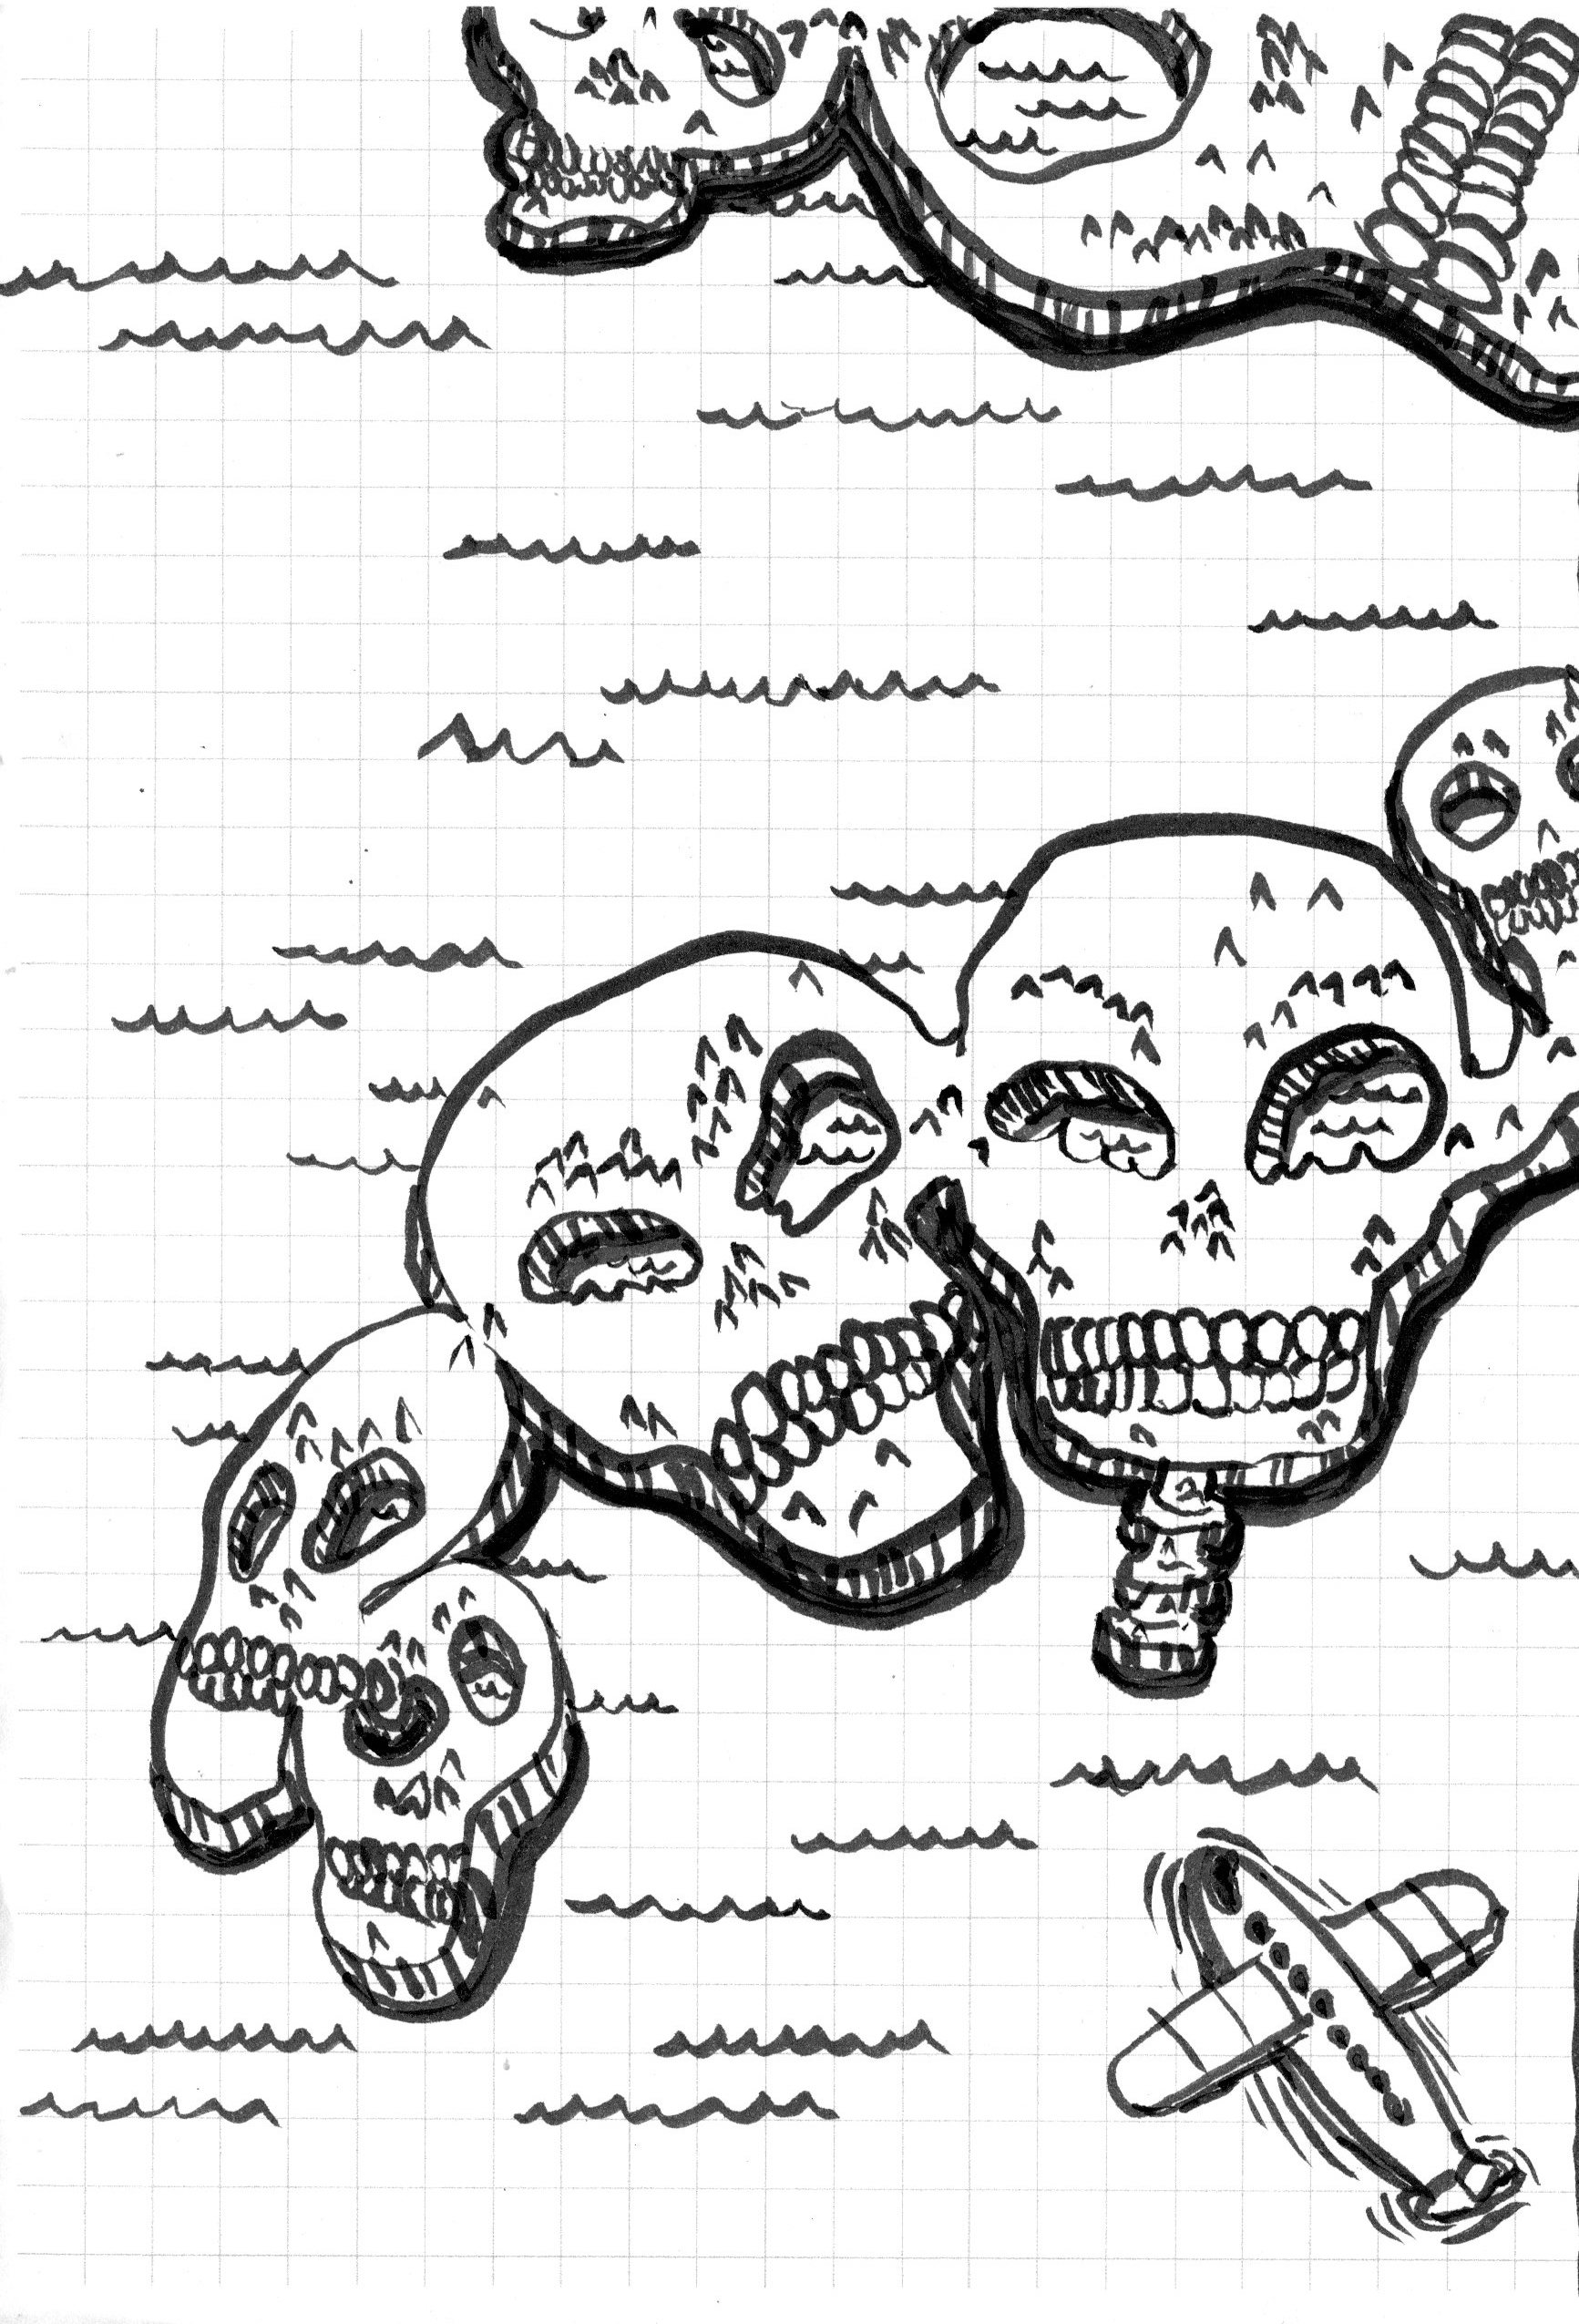 skull skulls island plane grid waves ocean paper pen ink